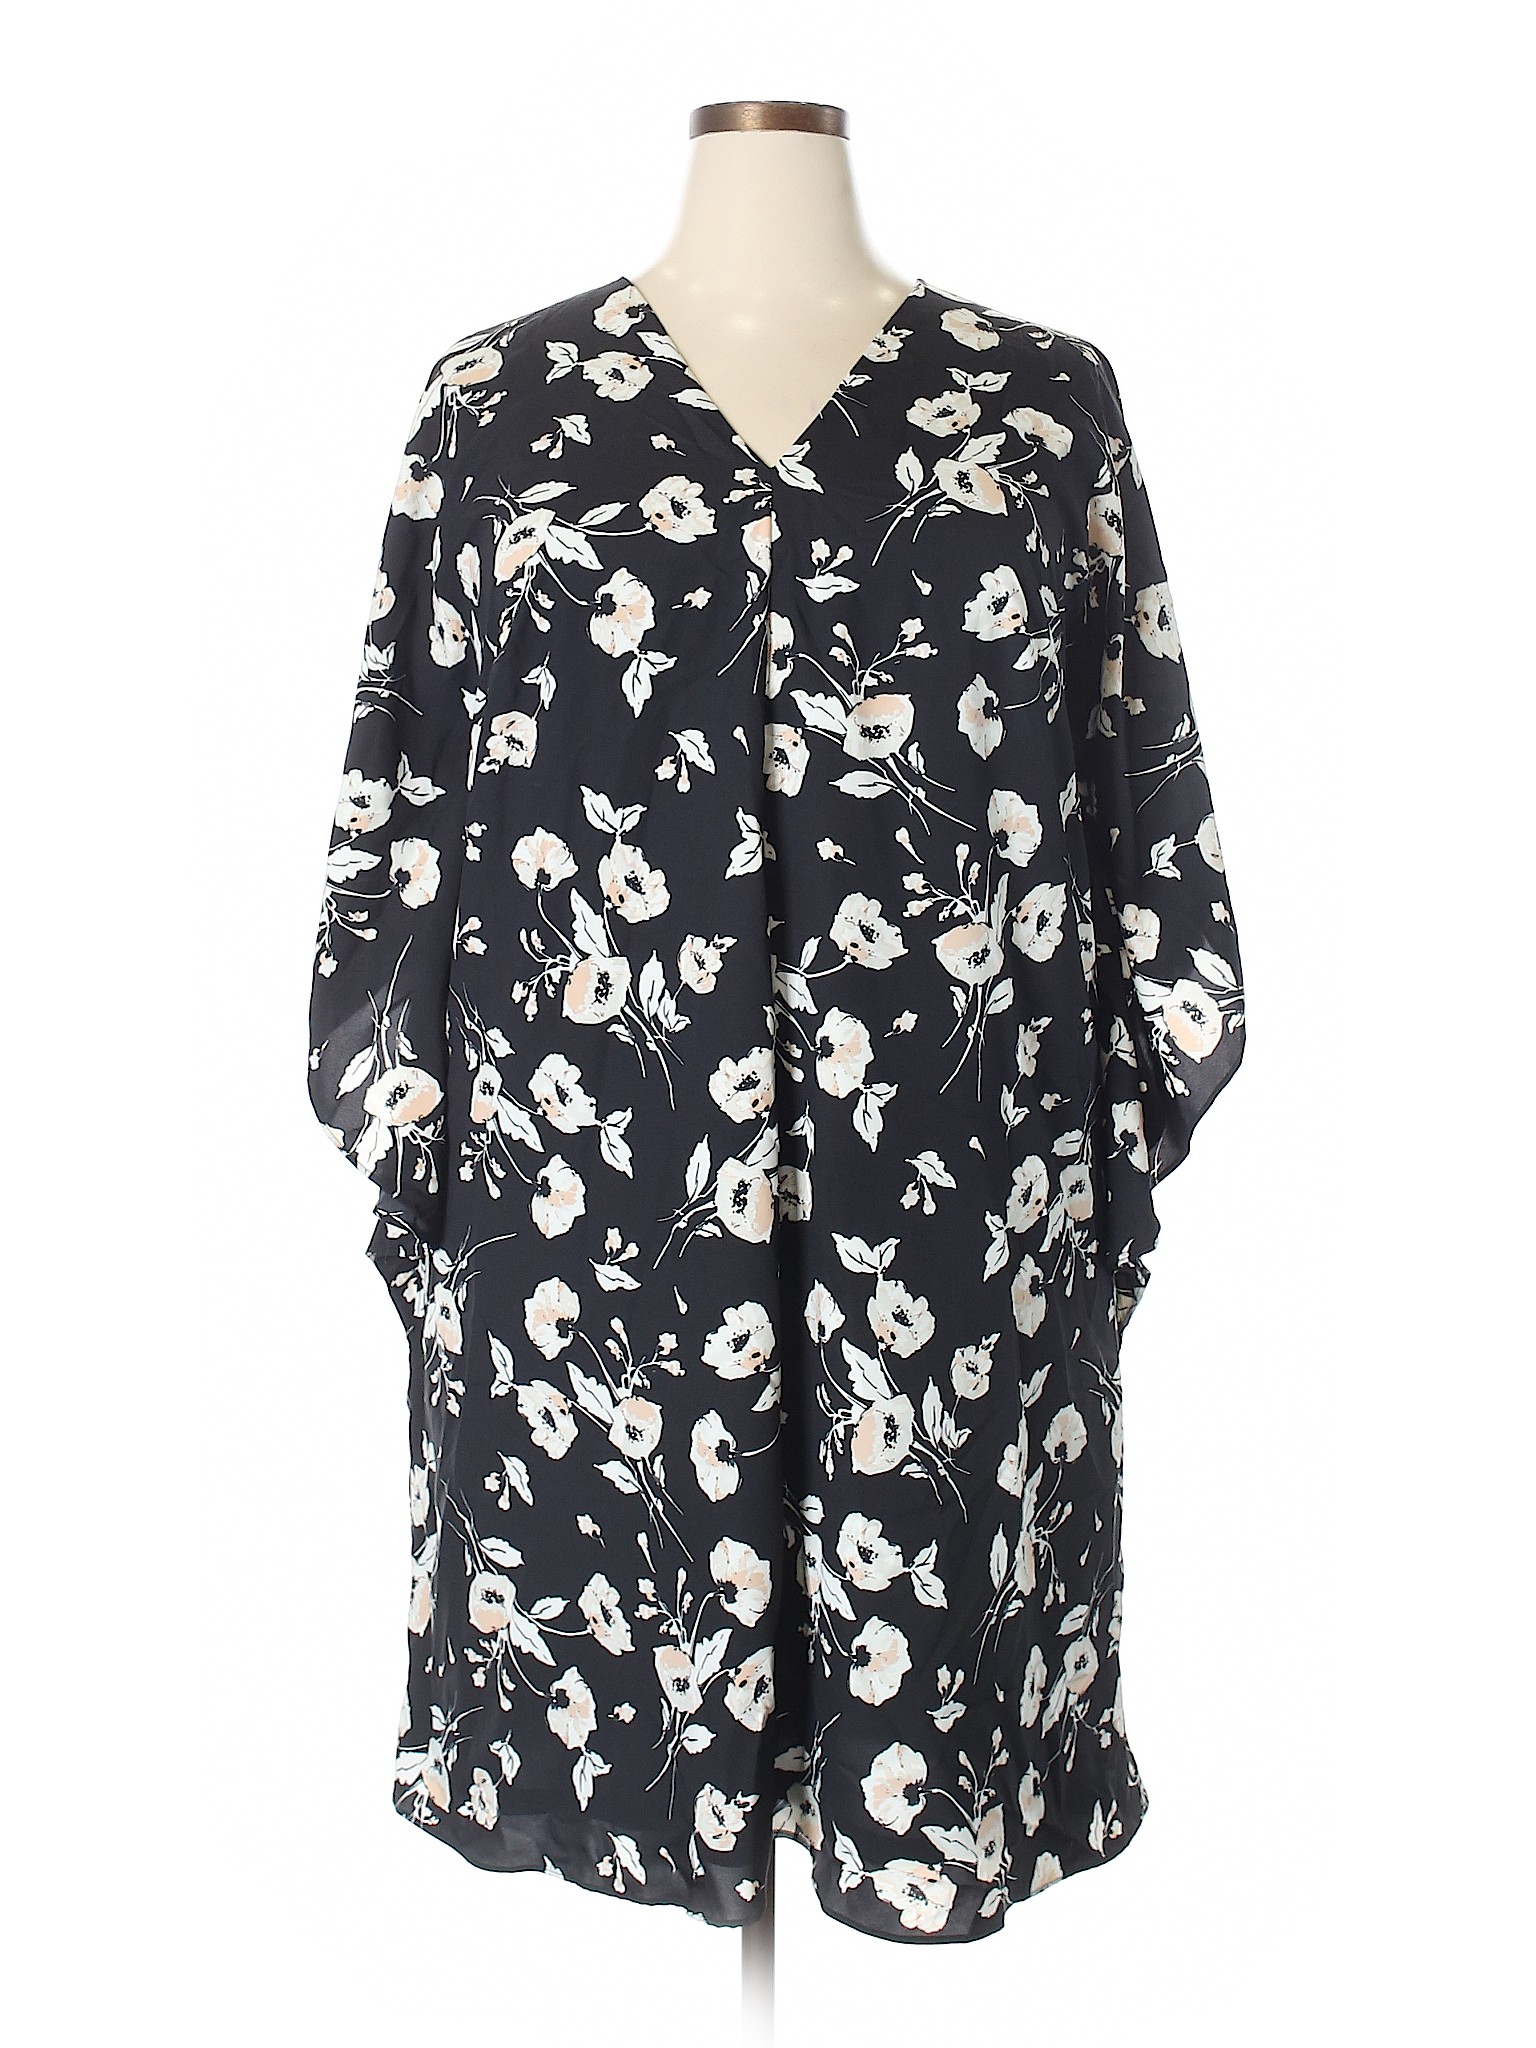 Lauren by Ralph Lauren 100% Polyester Floral Black Casual Dress Size 1X ...